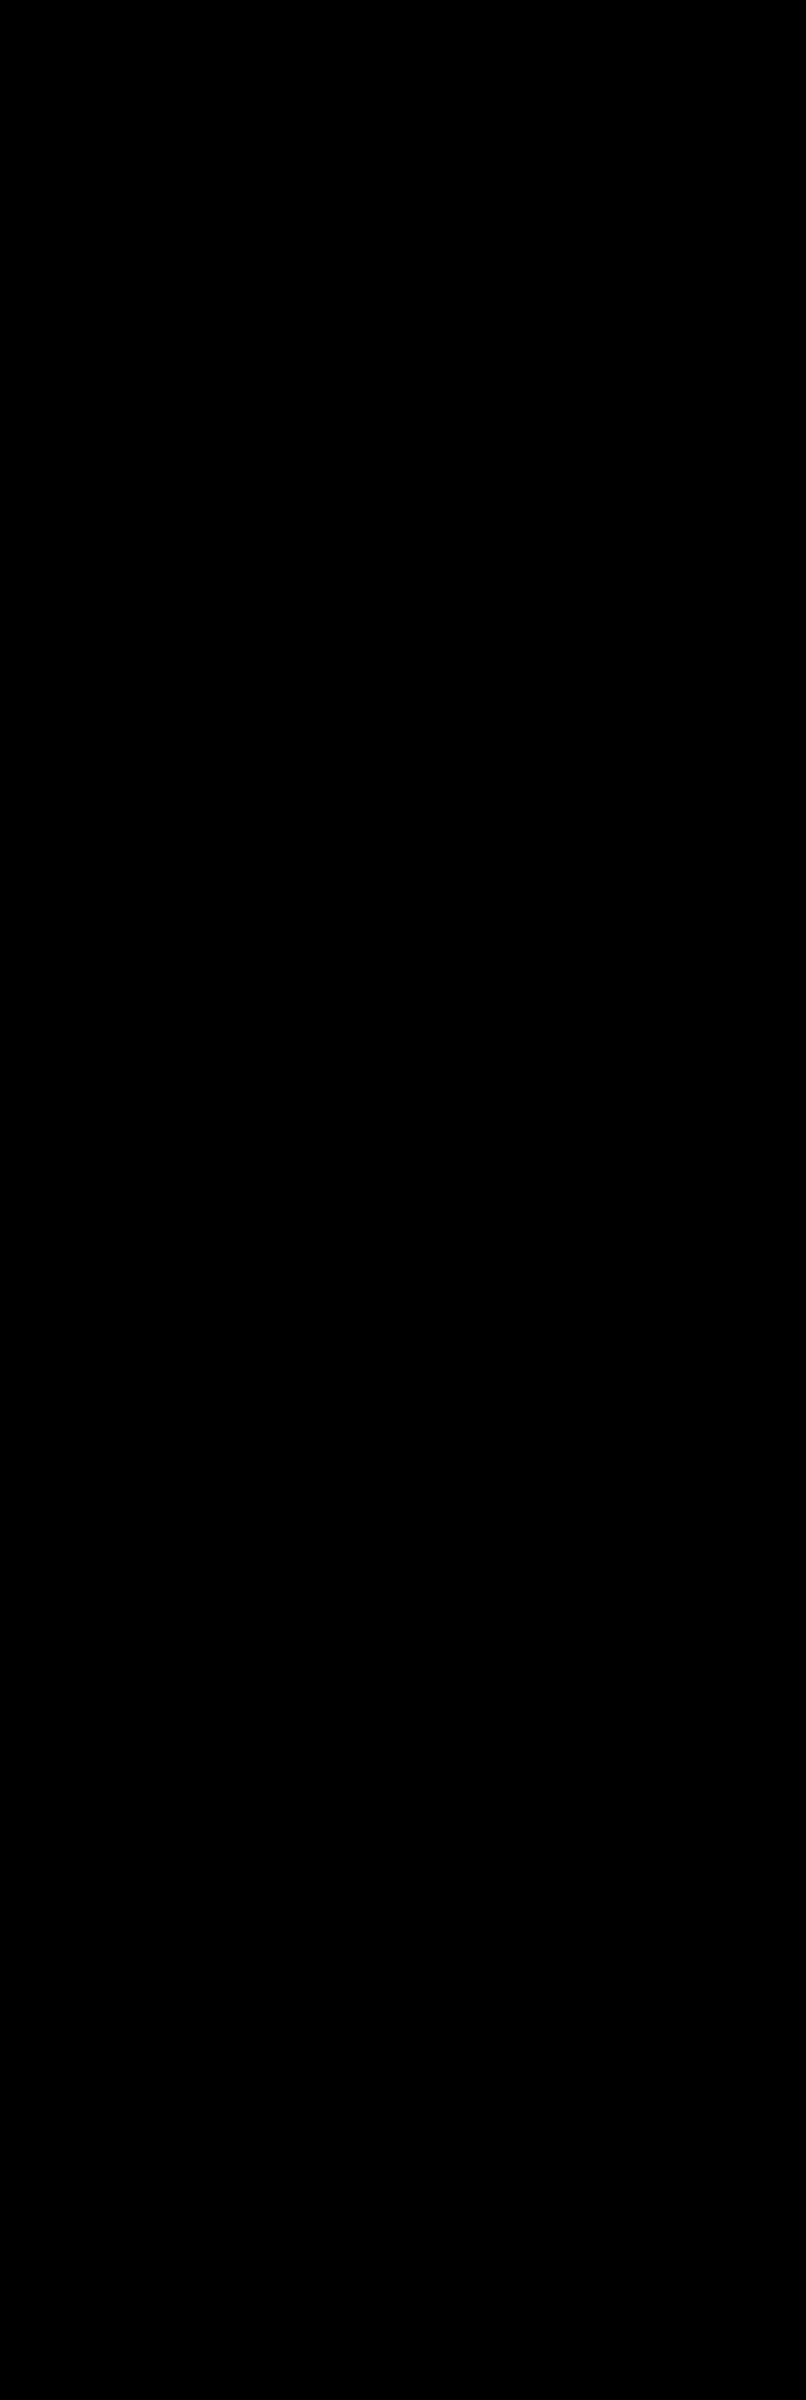 Stickman Figure Black Background.jpg PNG image